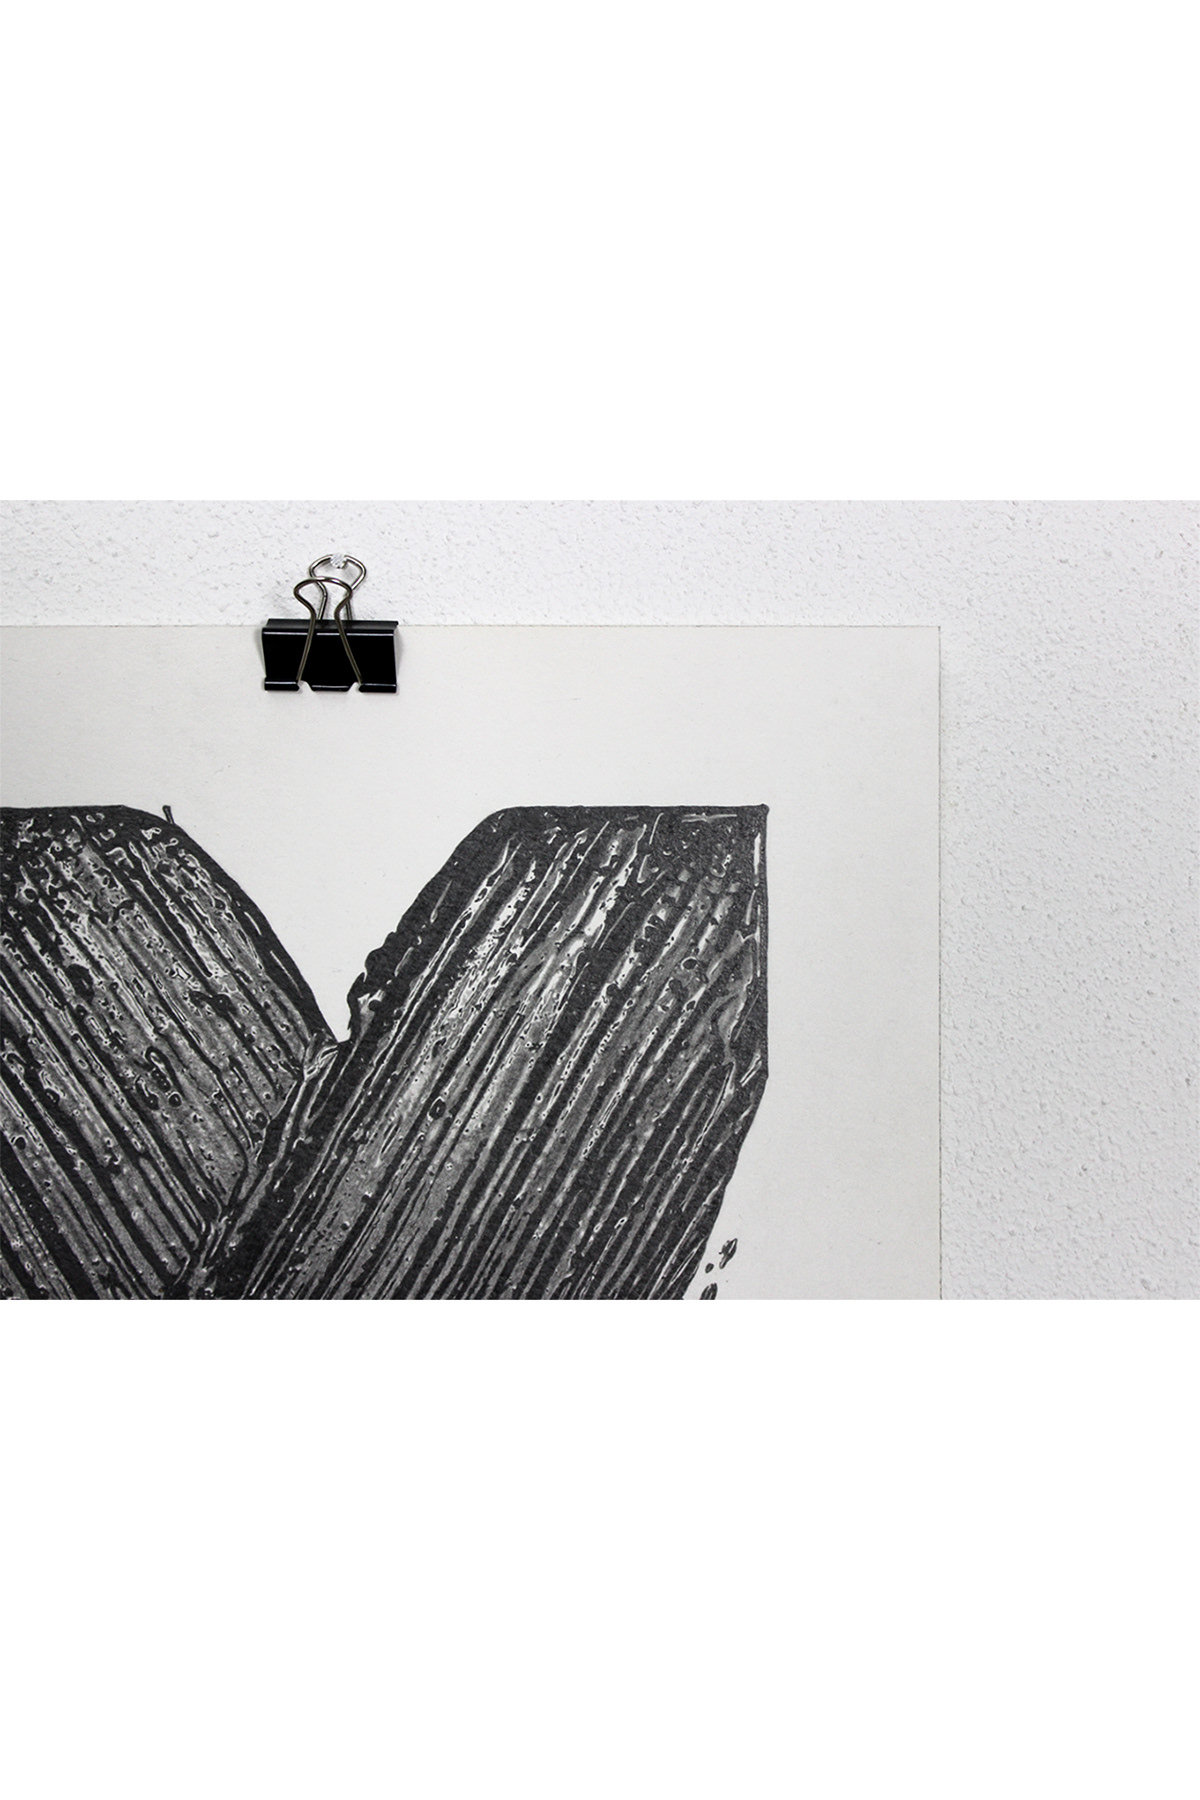 abstract art Drawing  graphite pencil Hyper Realist illusion sensory perception